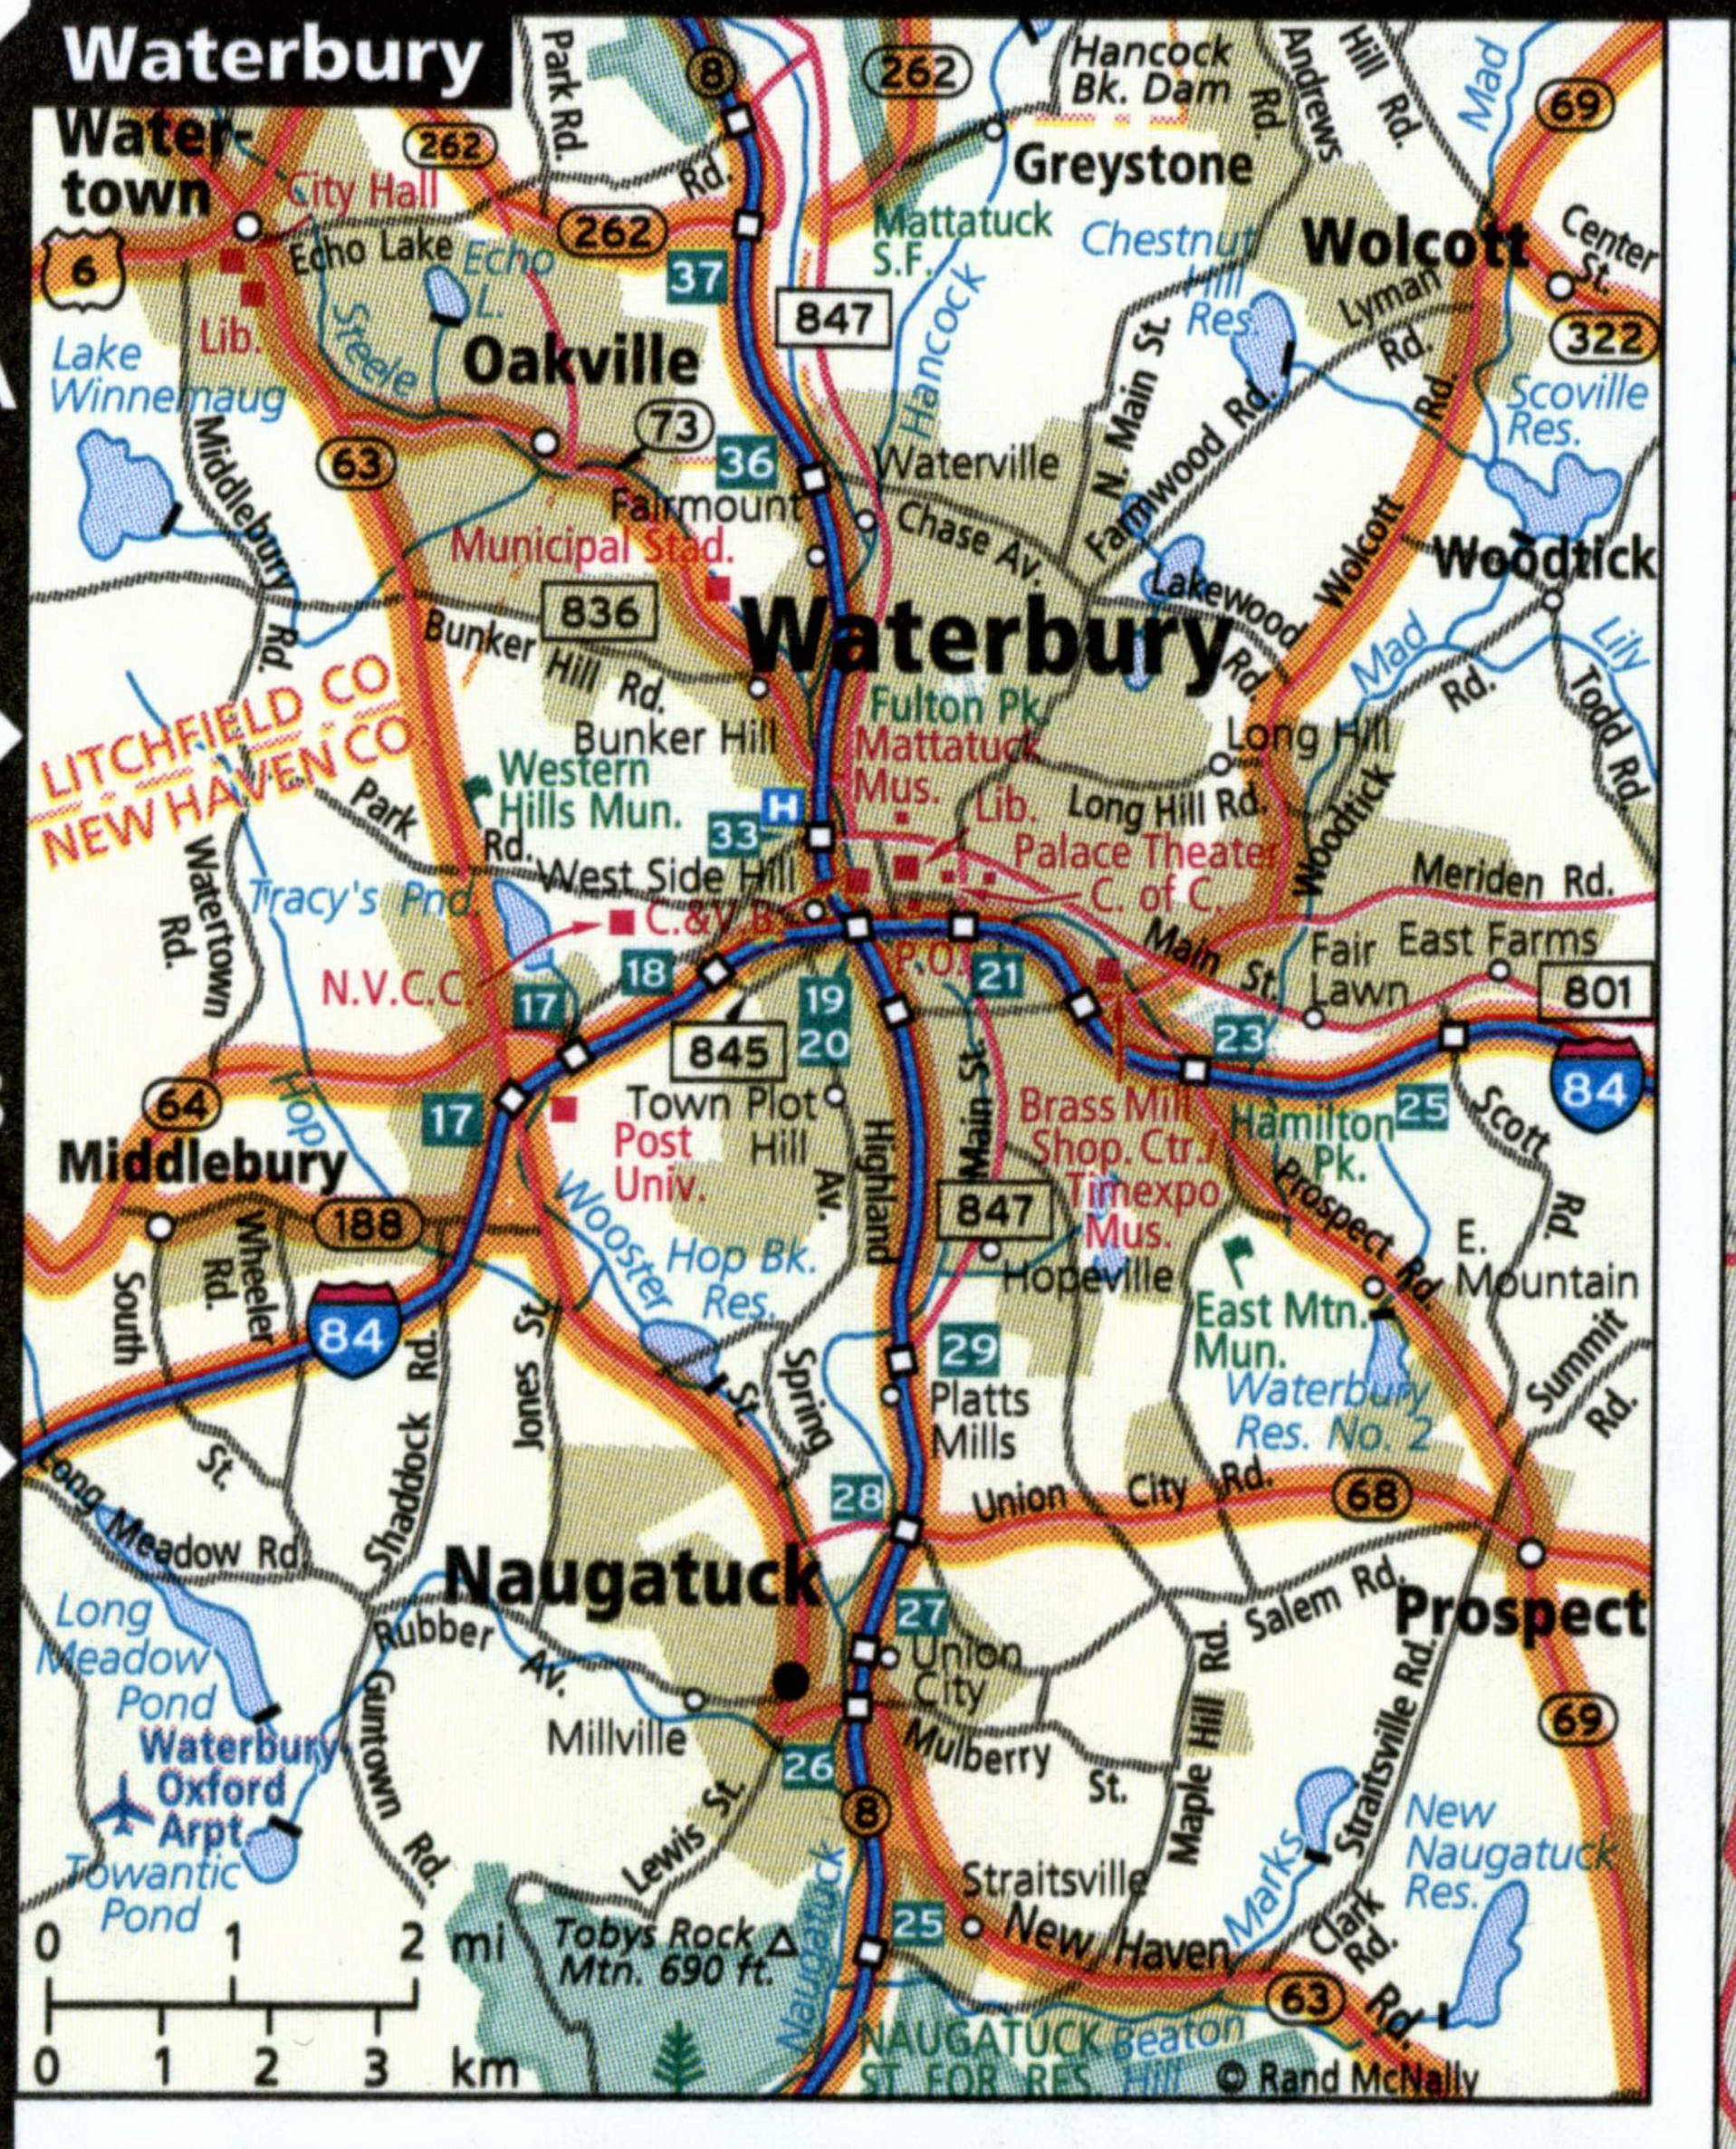 Waterbury city map for truckers